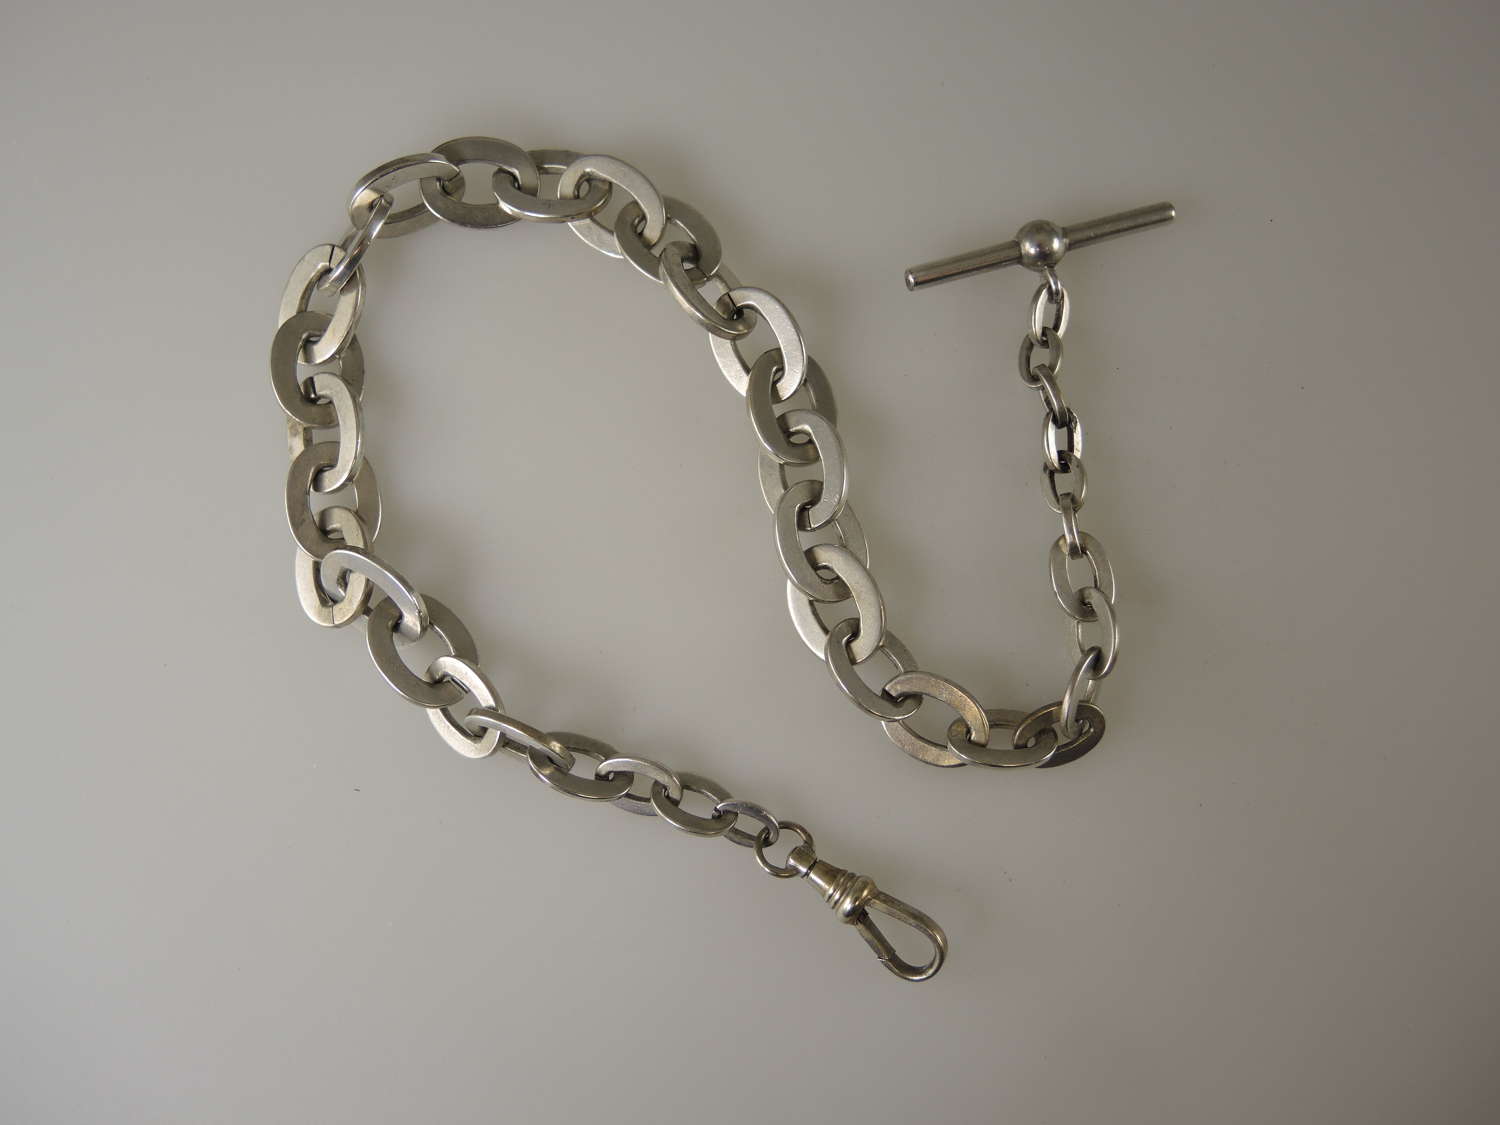 Stylish antique silver pocket watch chain c1890